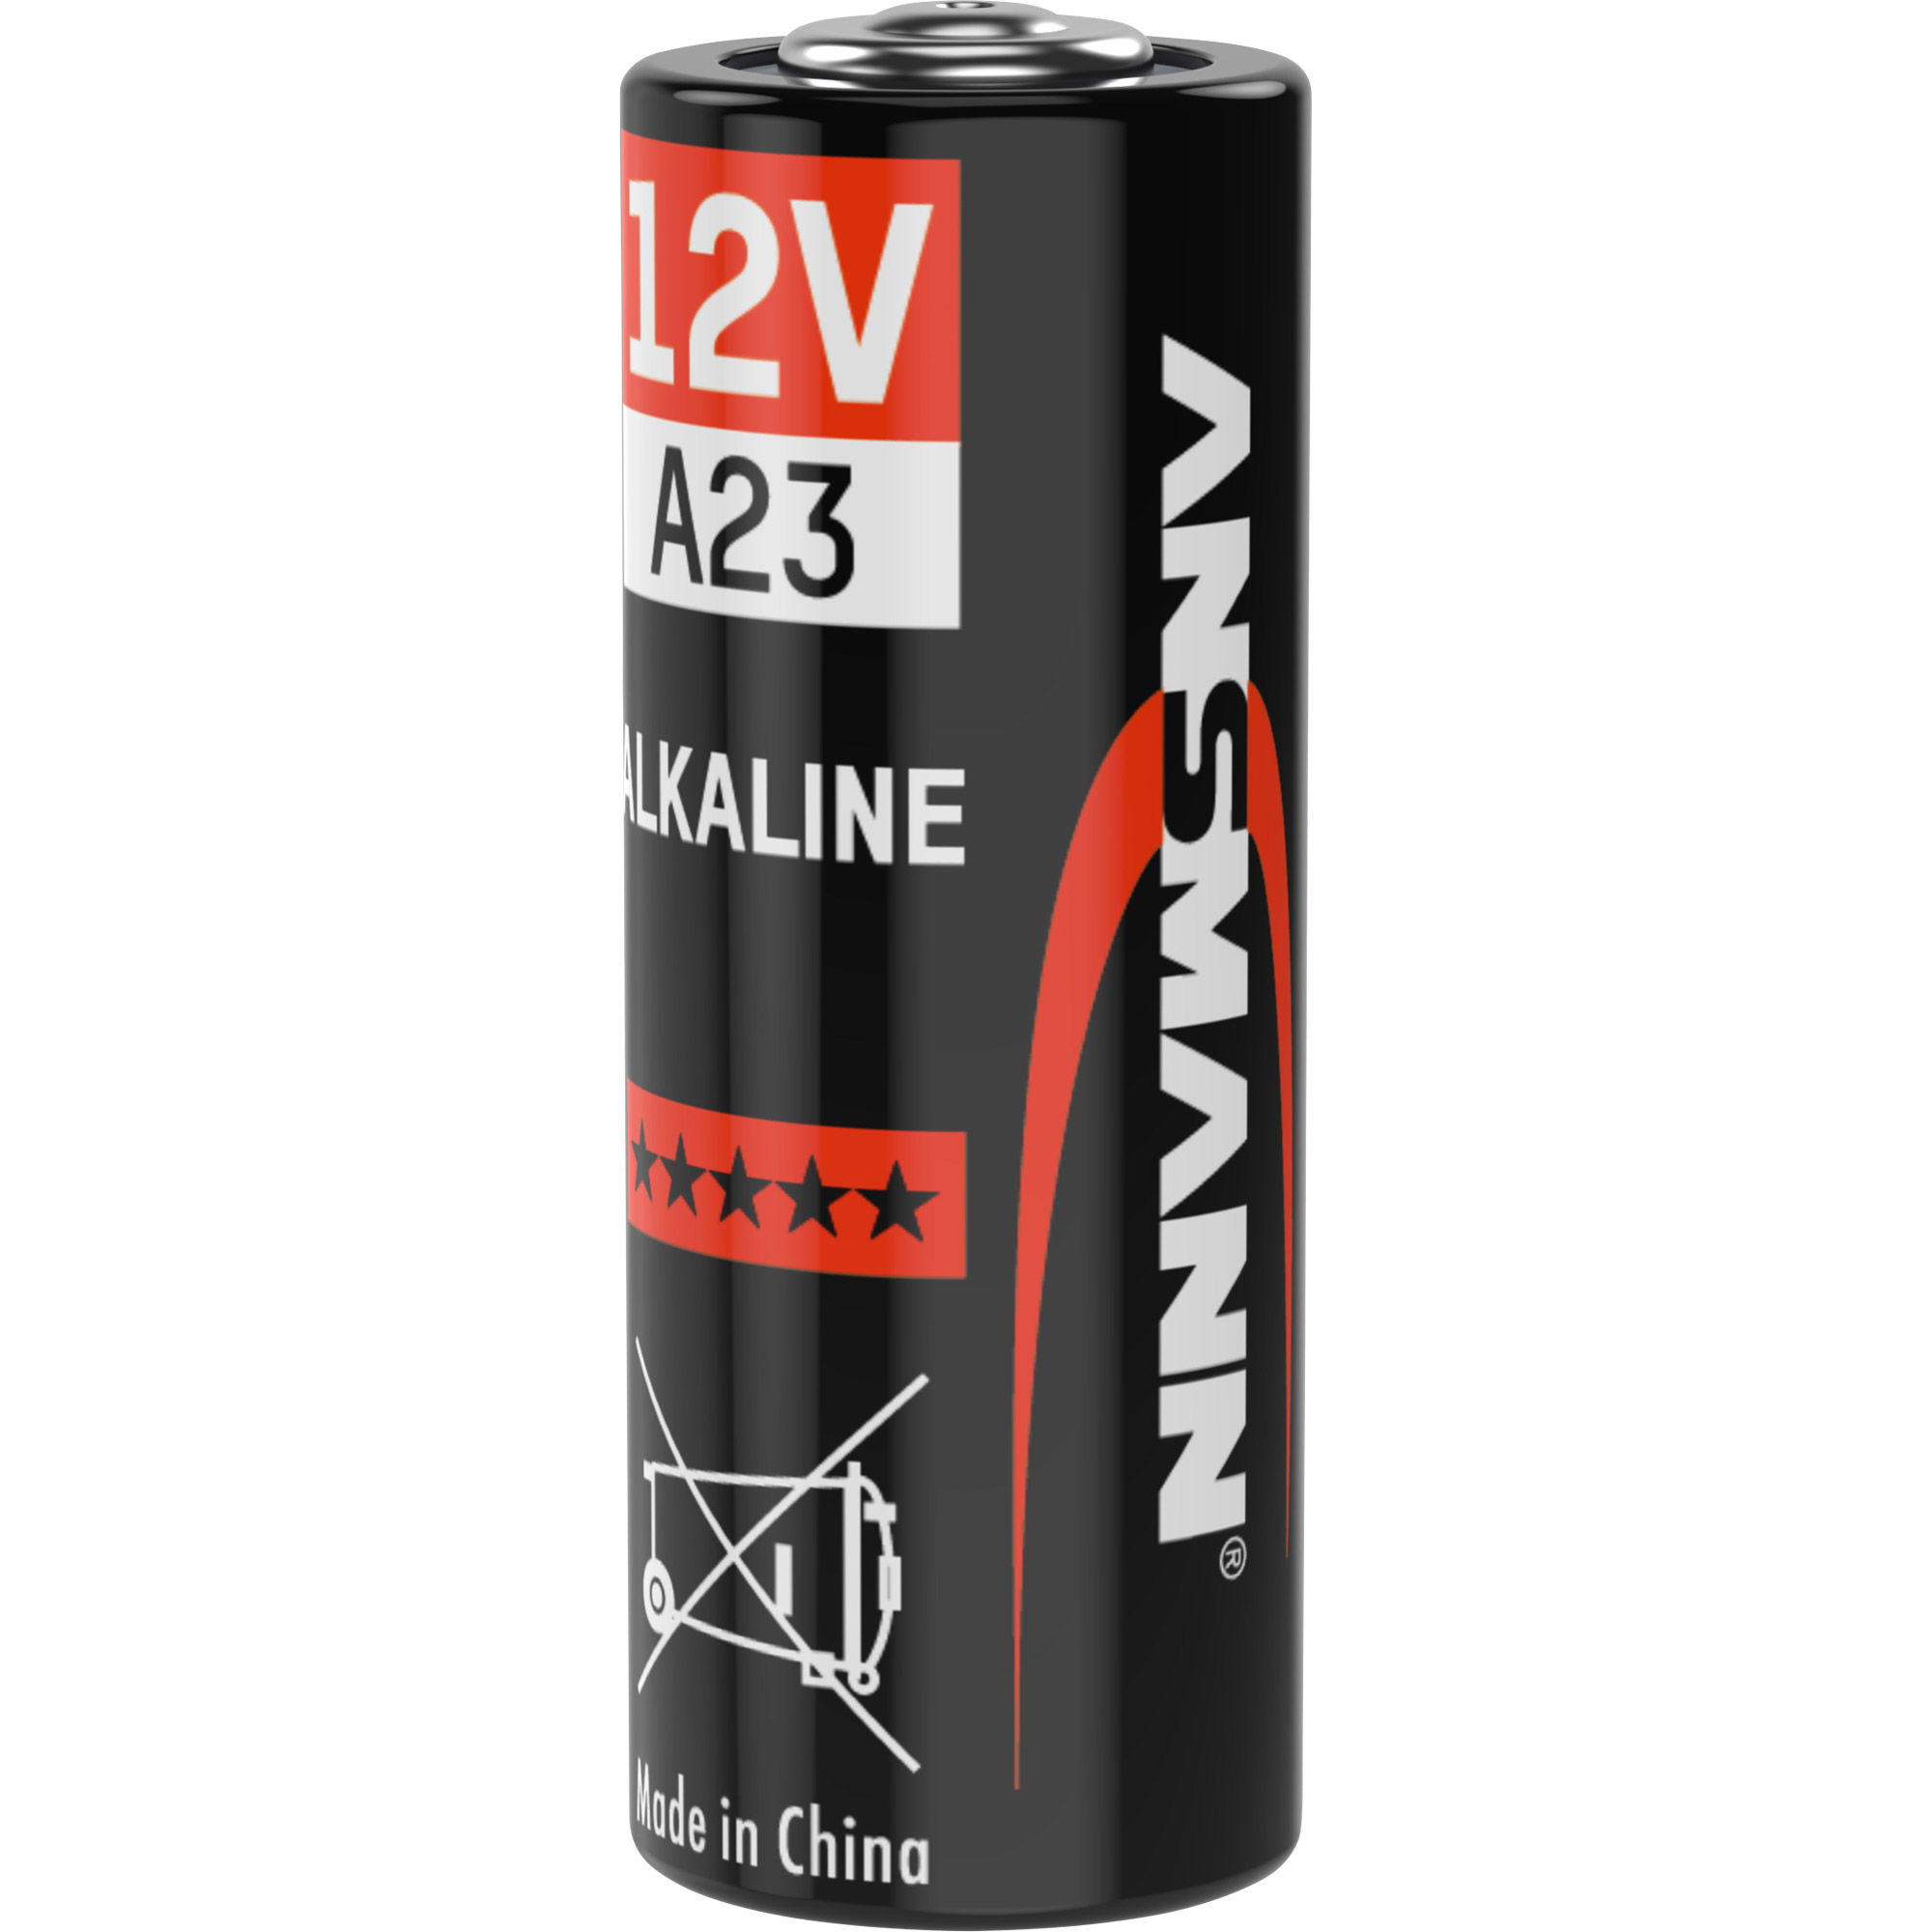 ANSMANN 5015182 Alkaline Batterie A23 12V »